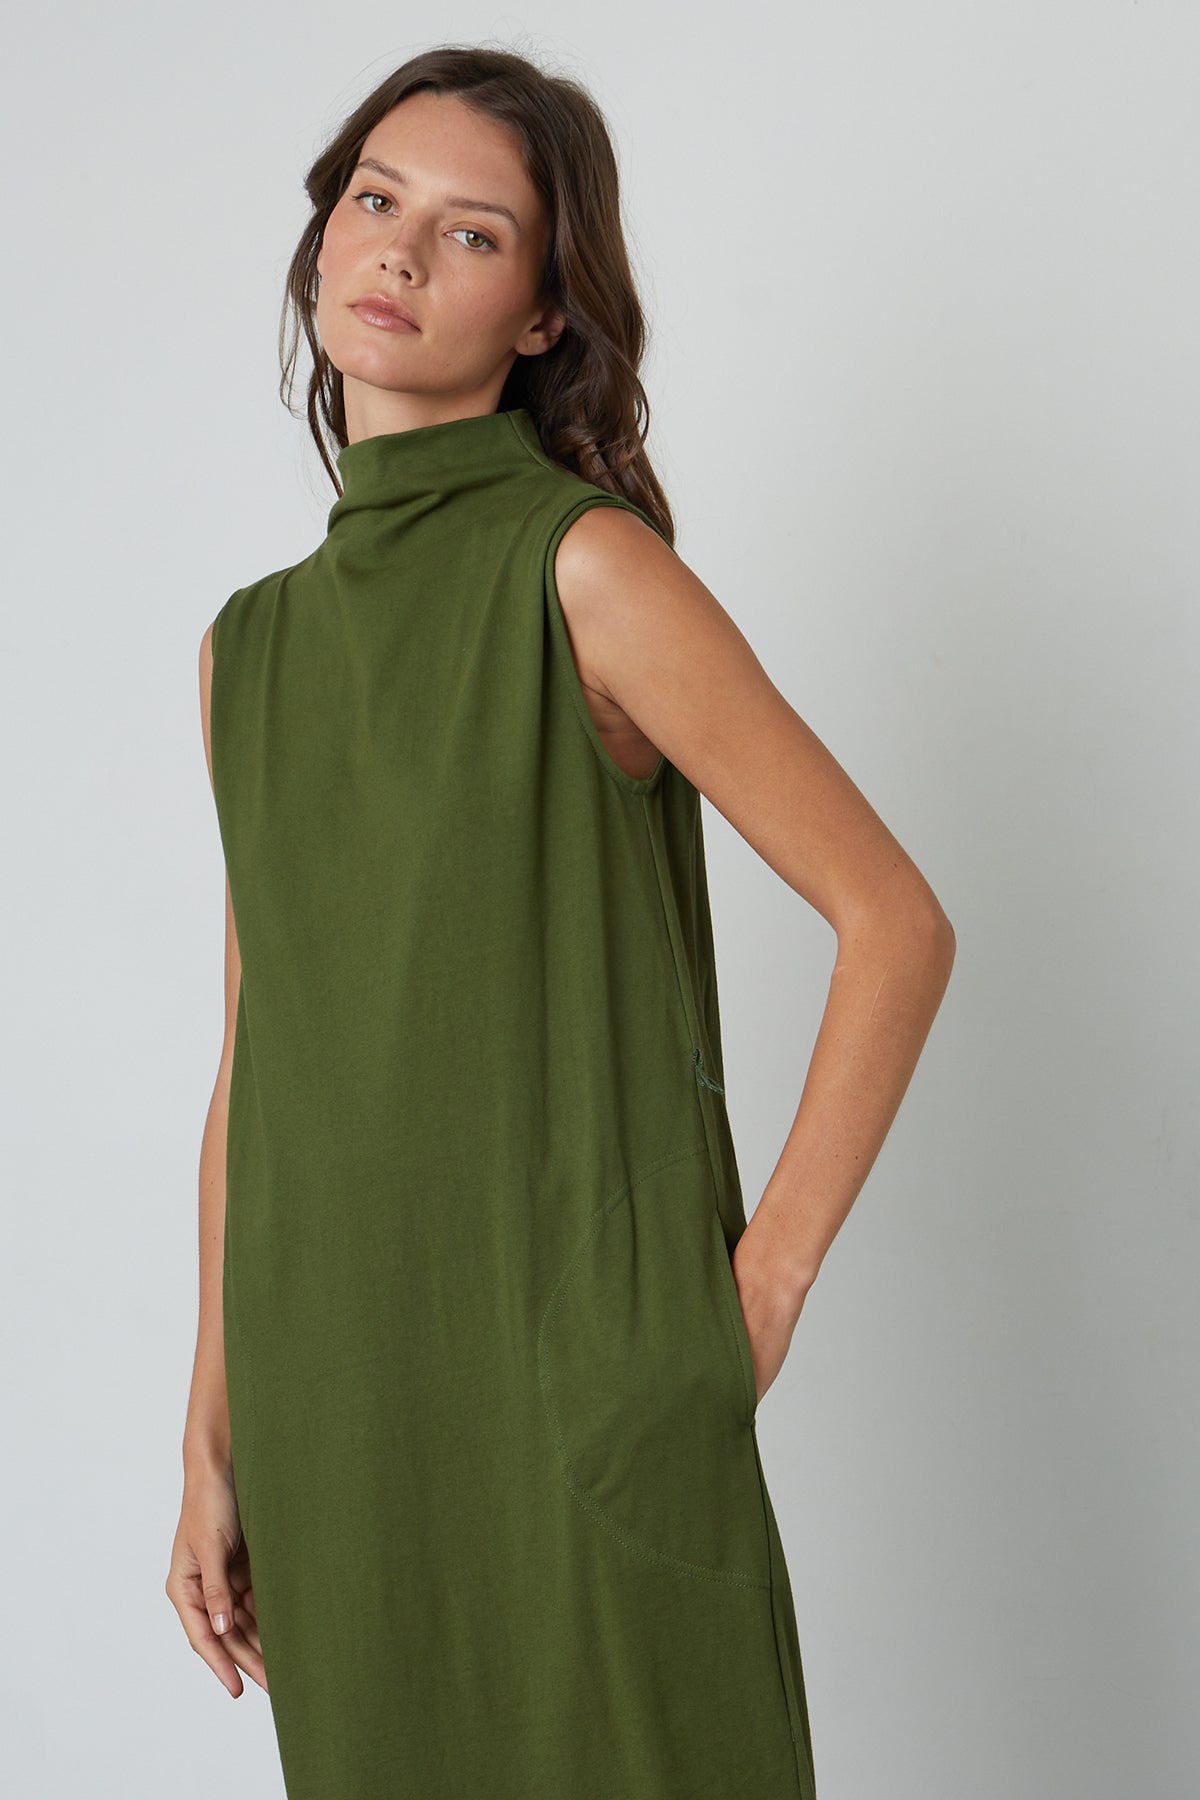 The model is wearing a green Velvet by Graham & Spencer Hydie Mock Neck Dress.-25046891069633